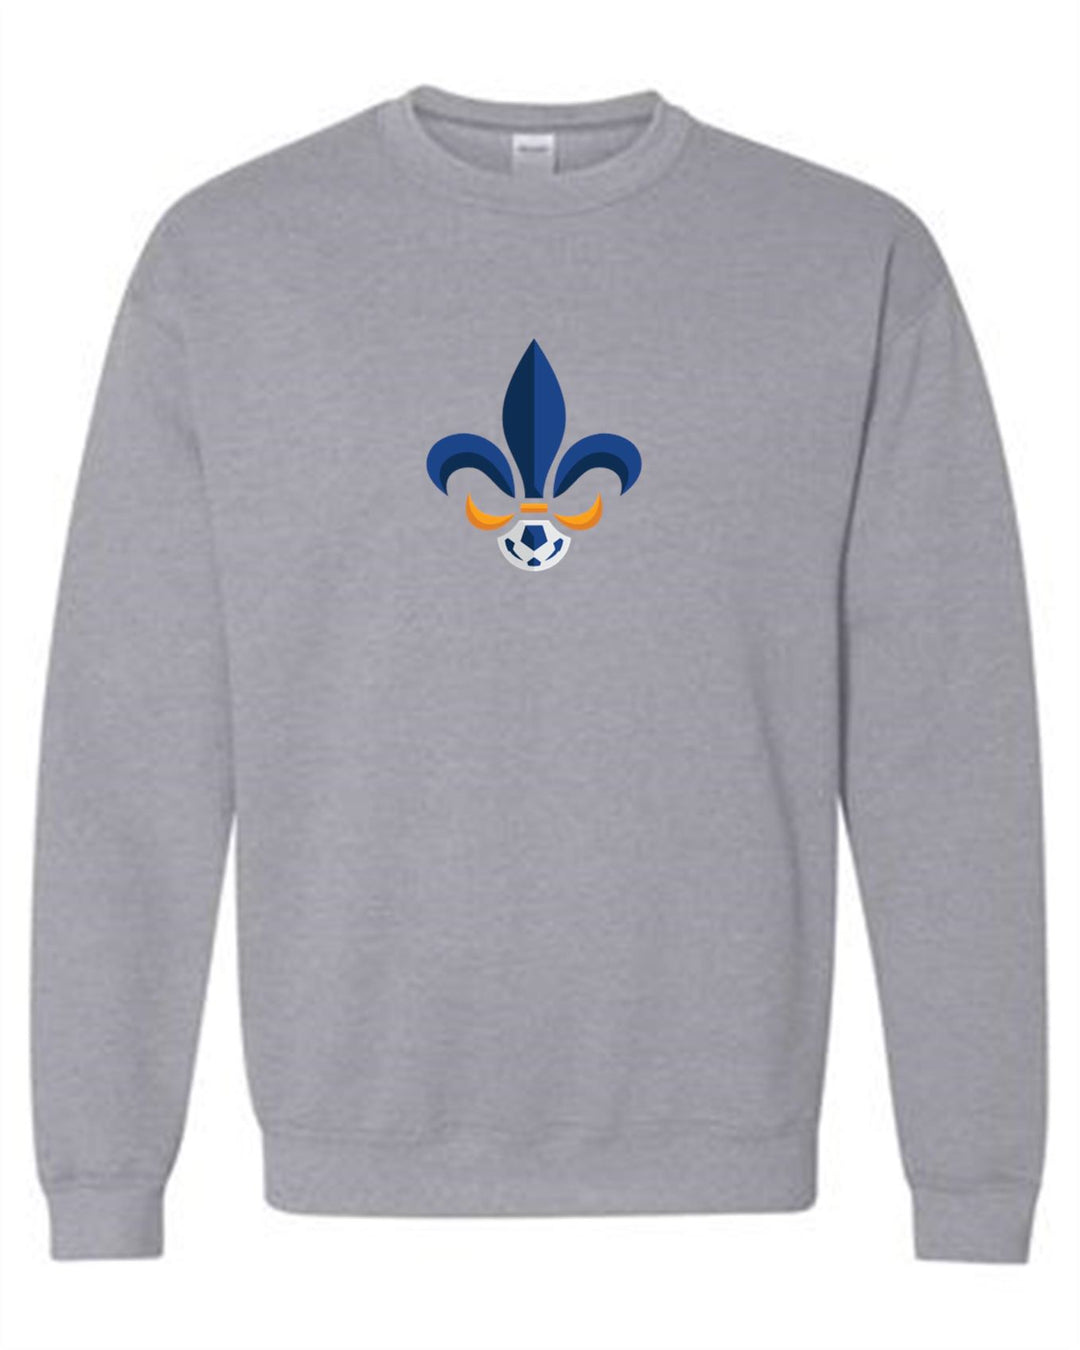 Louisiana Select Logo Crew Neck Sweatshirt LA ODP Spiritwear Sport Grey Youth Small - Third Coast Soccer